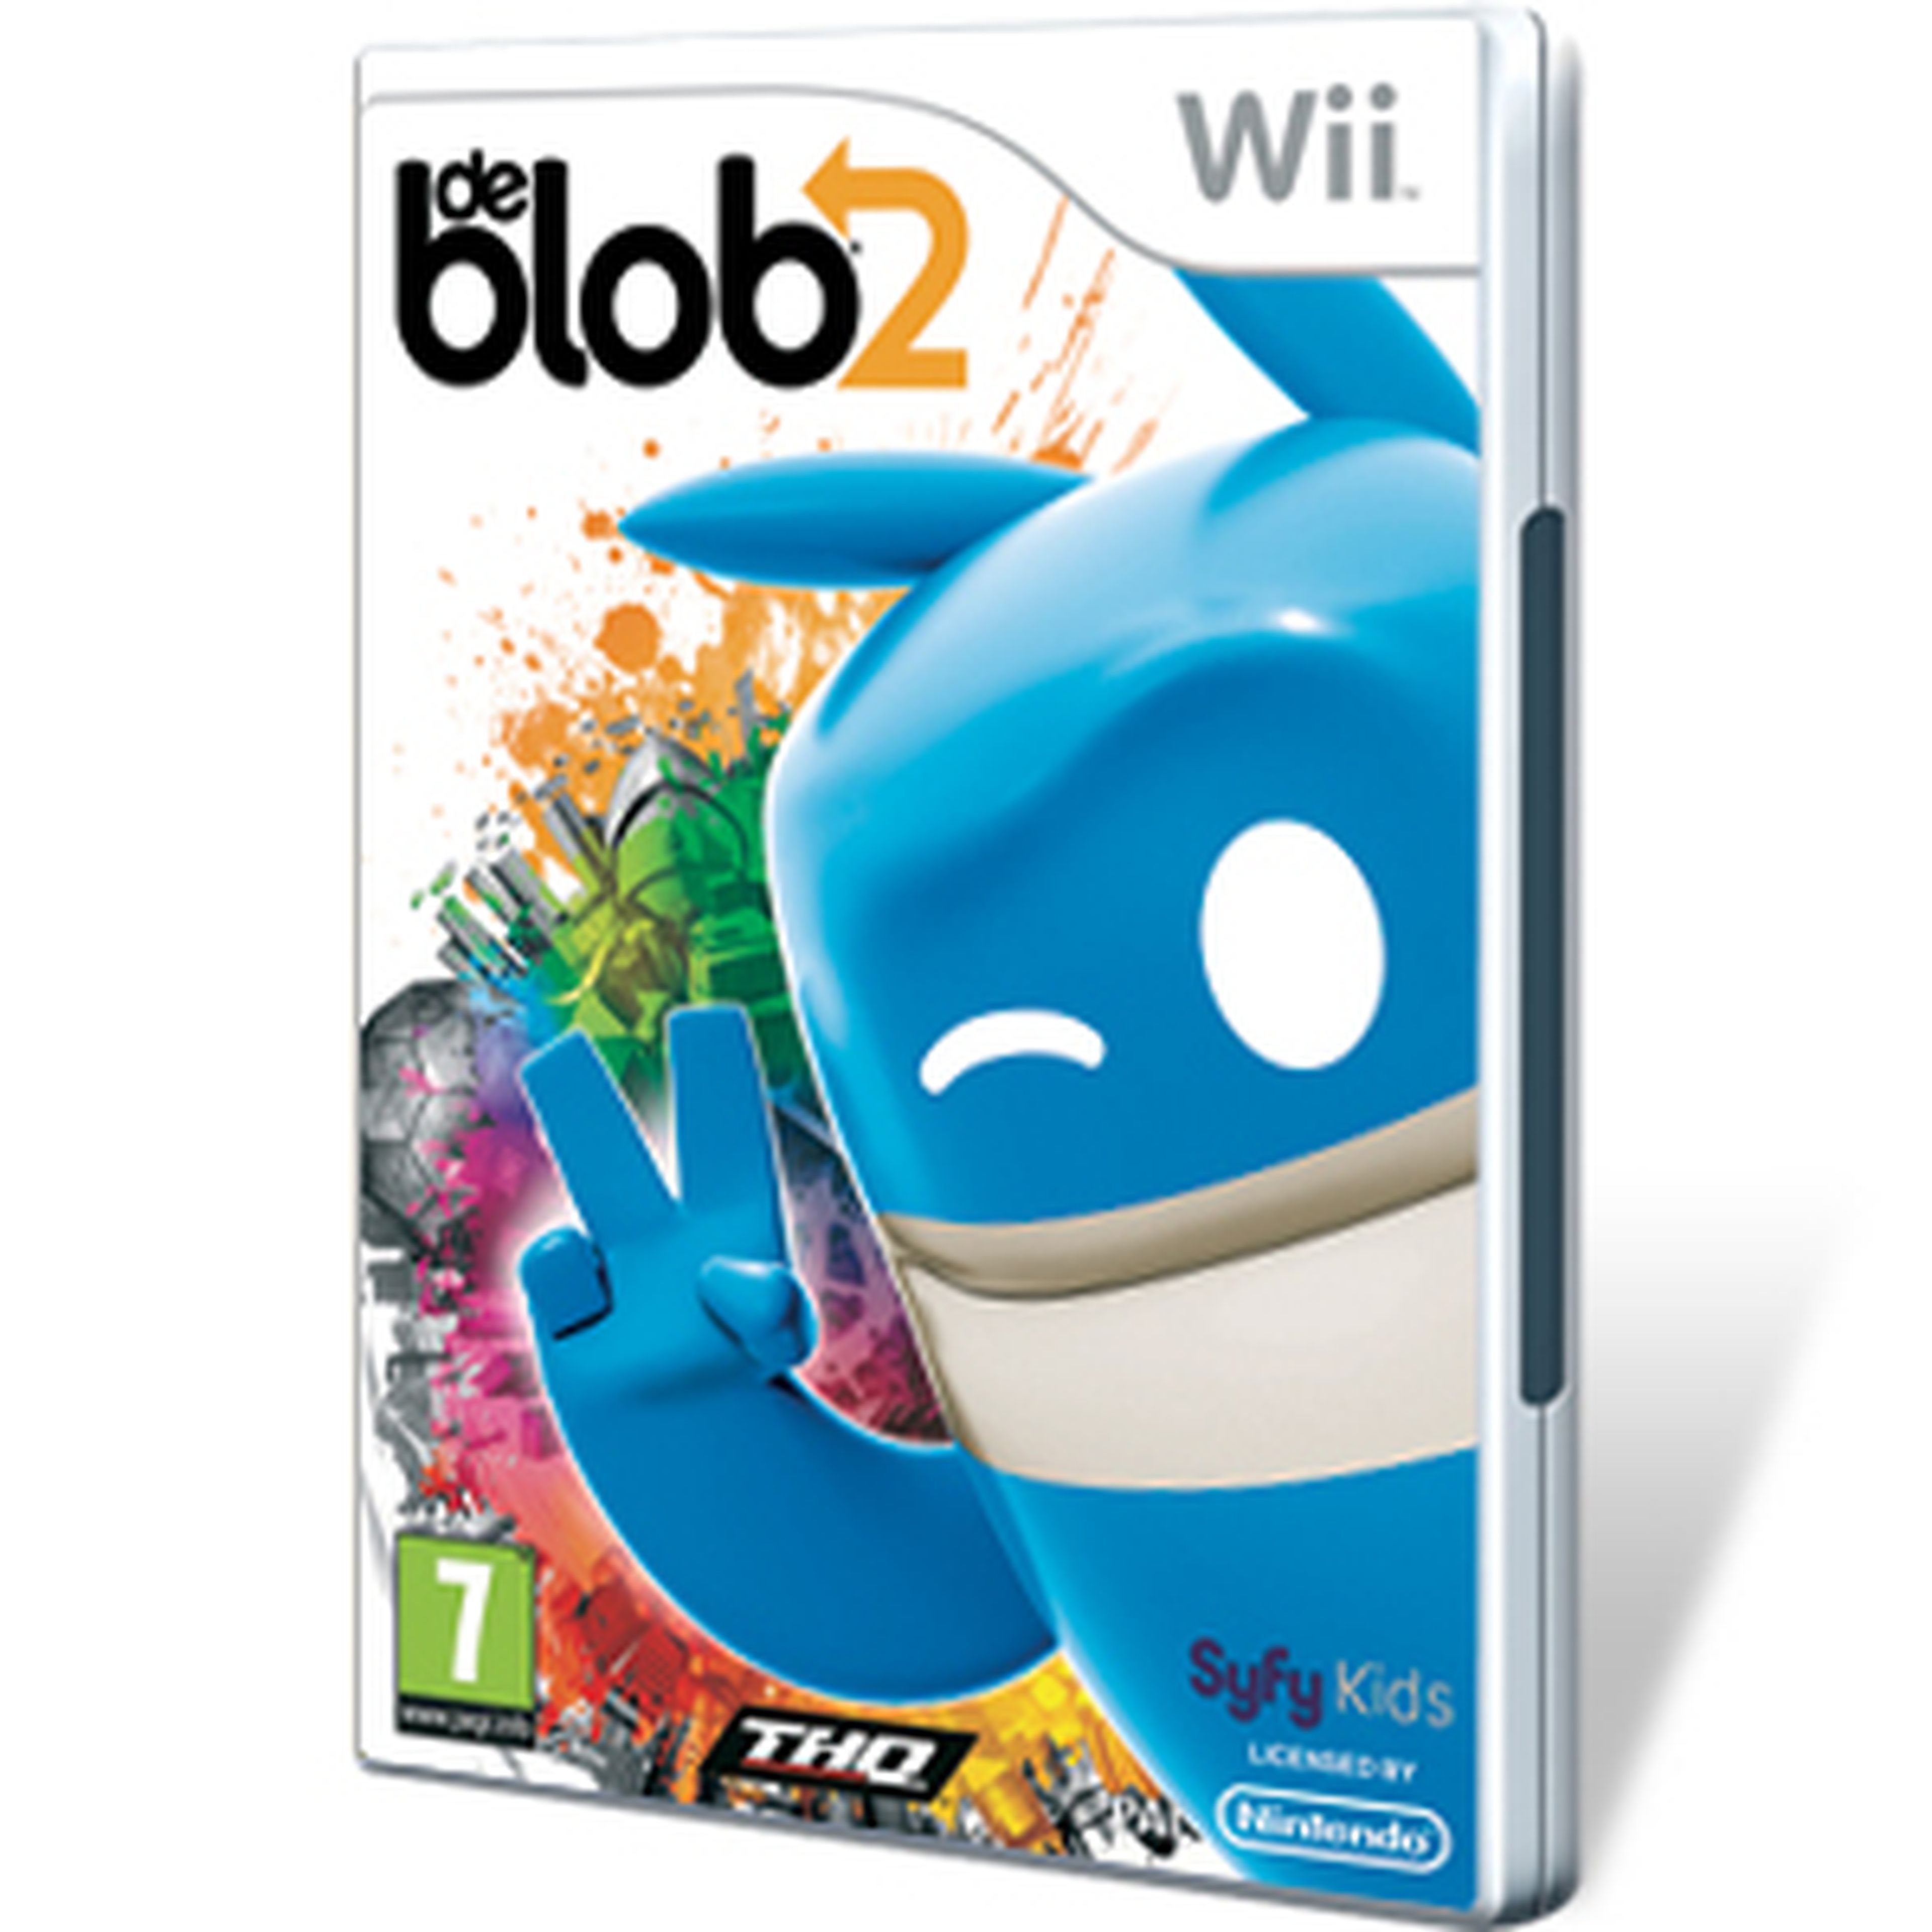 de Blob 2 para Wii